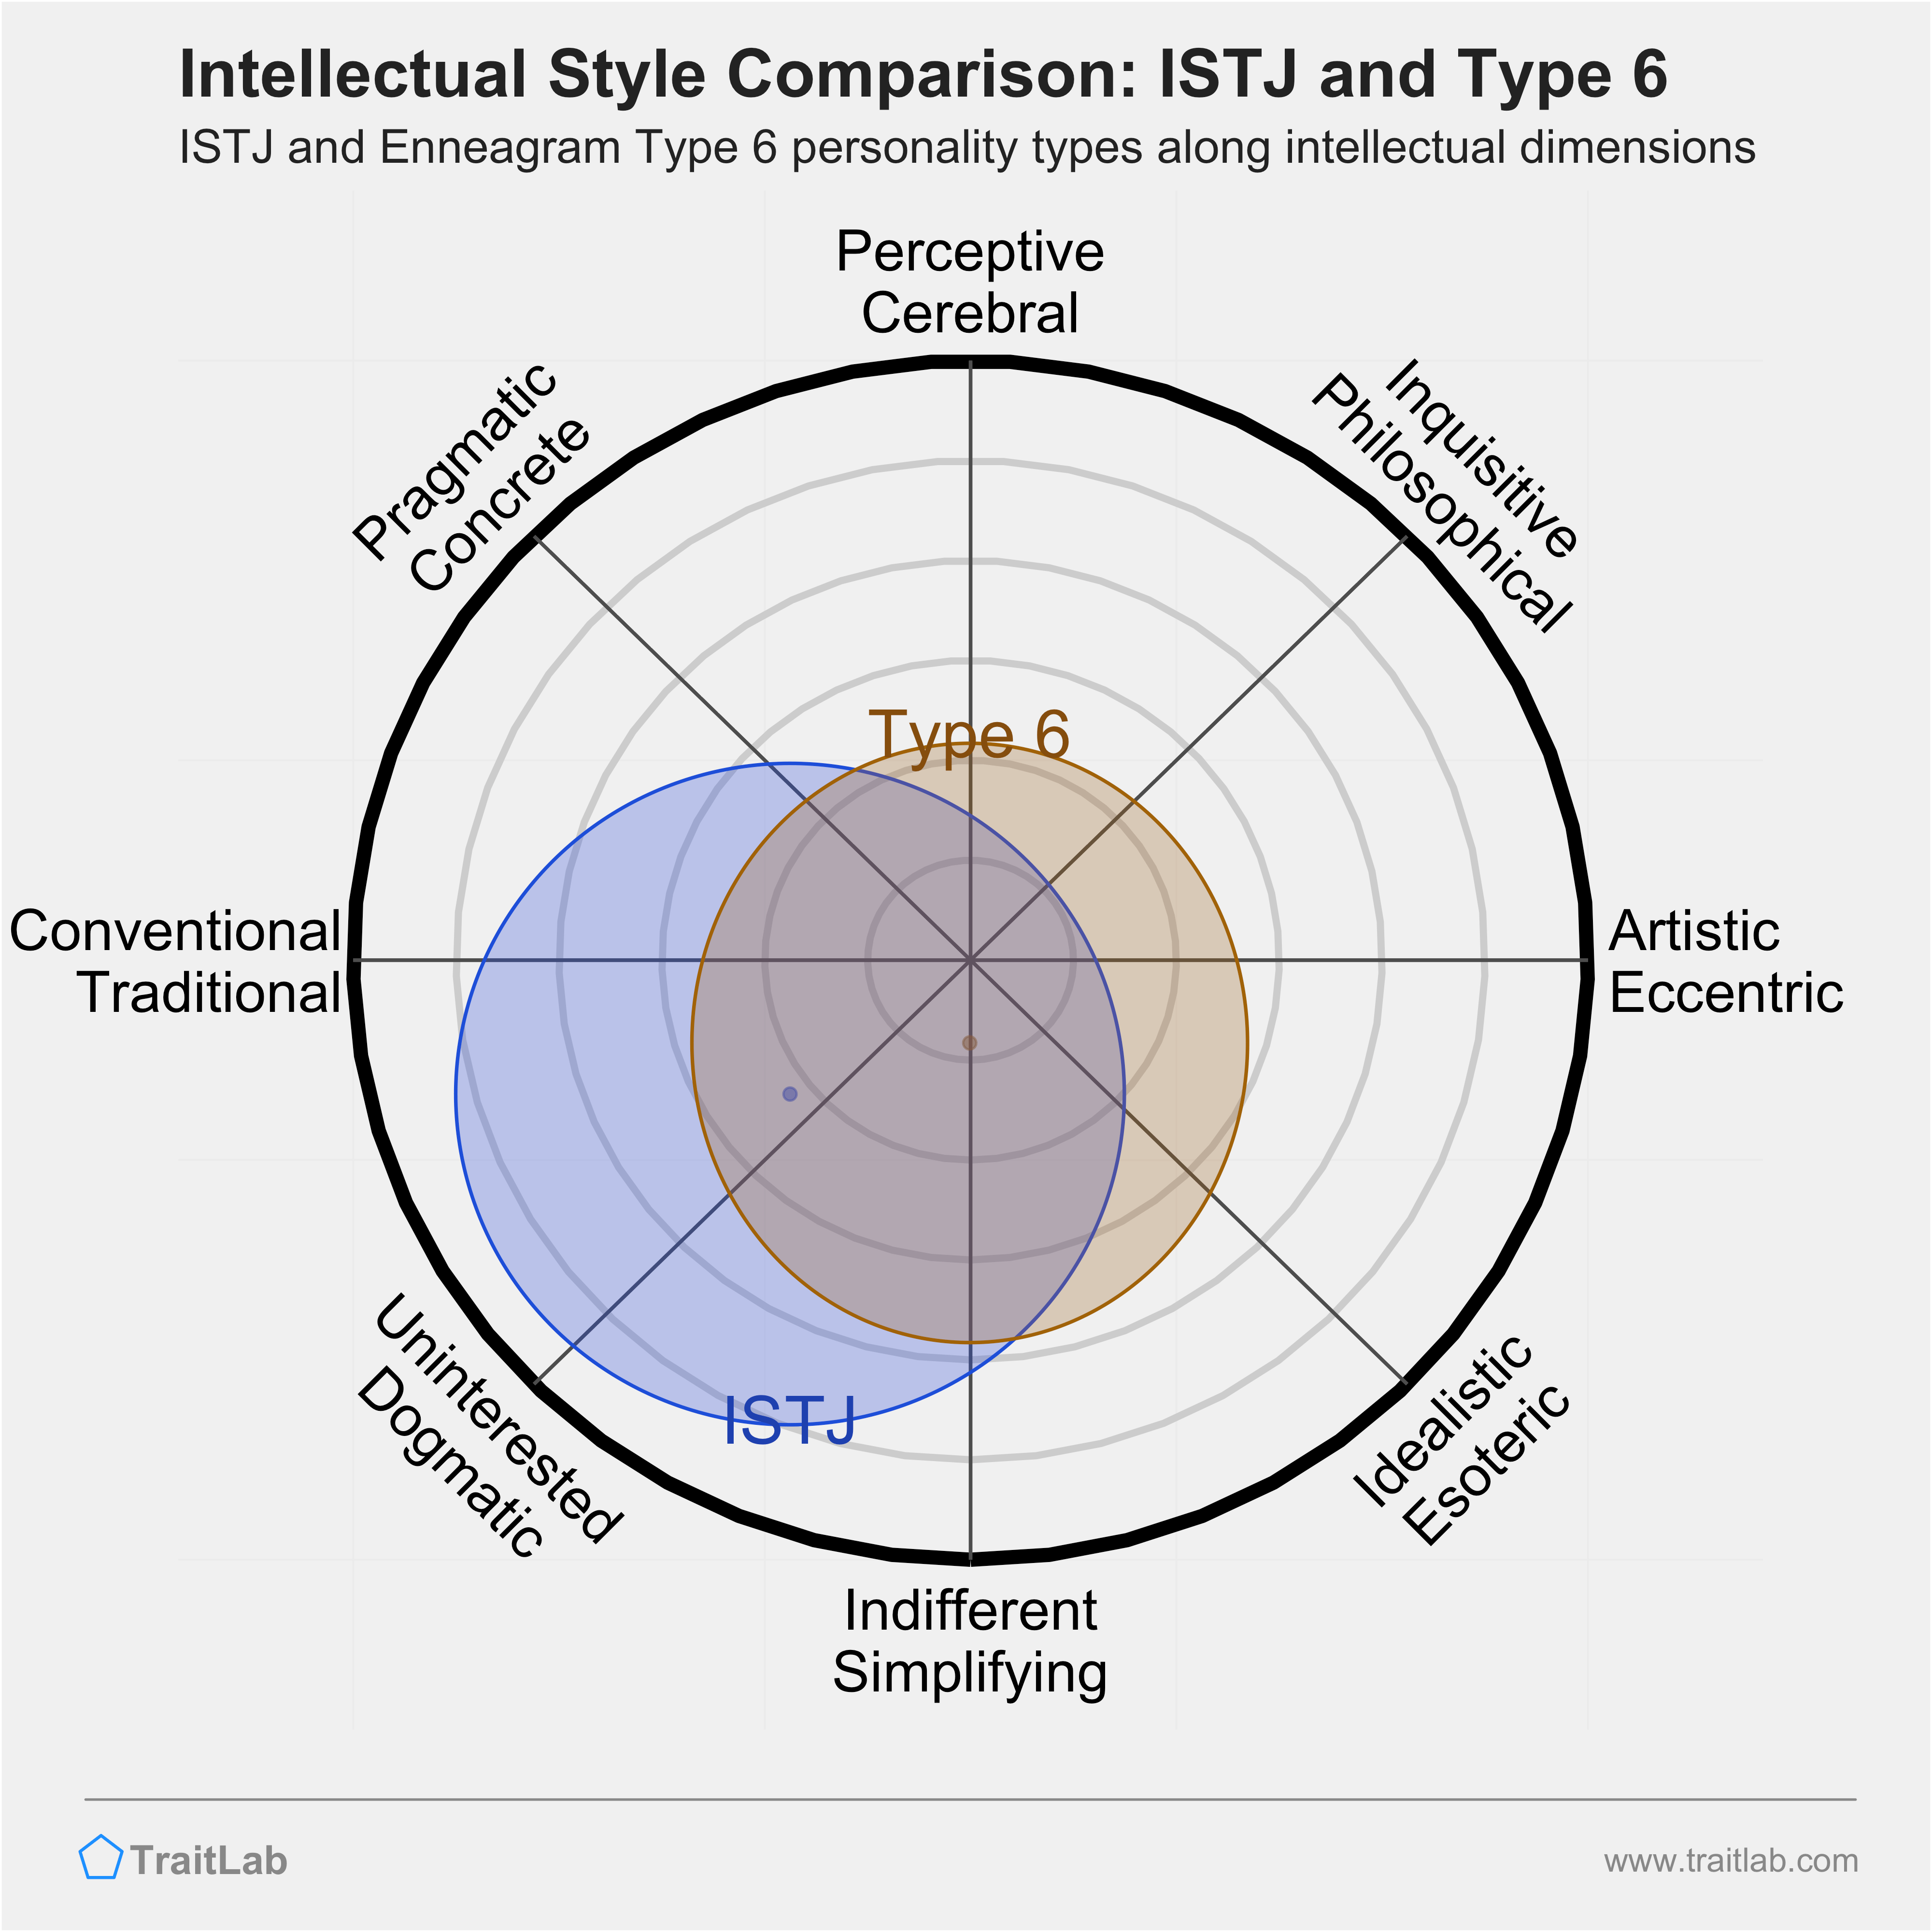 ISTJ and Type 6 comparison across intellectual dimensions